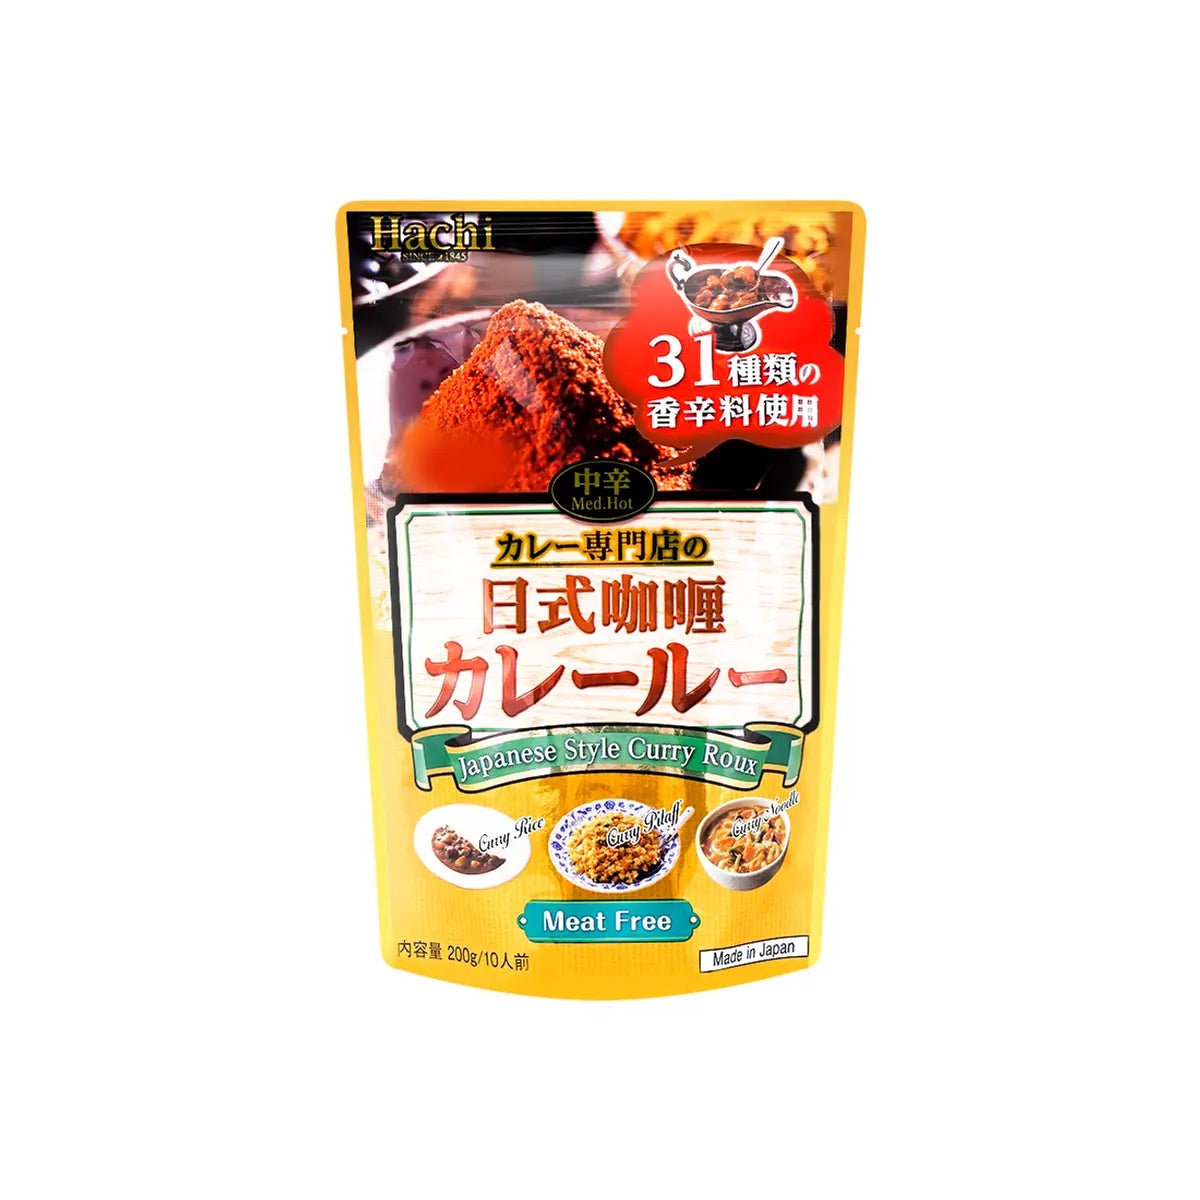 Hachi 일본식 카레 루 (매운맛) - 200g/7oz